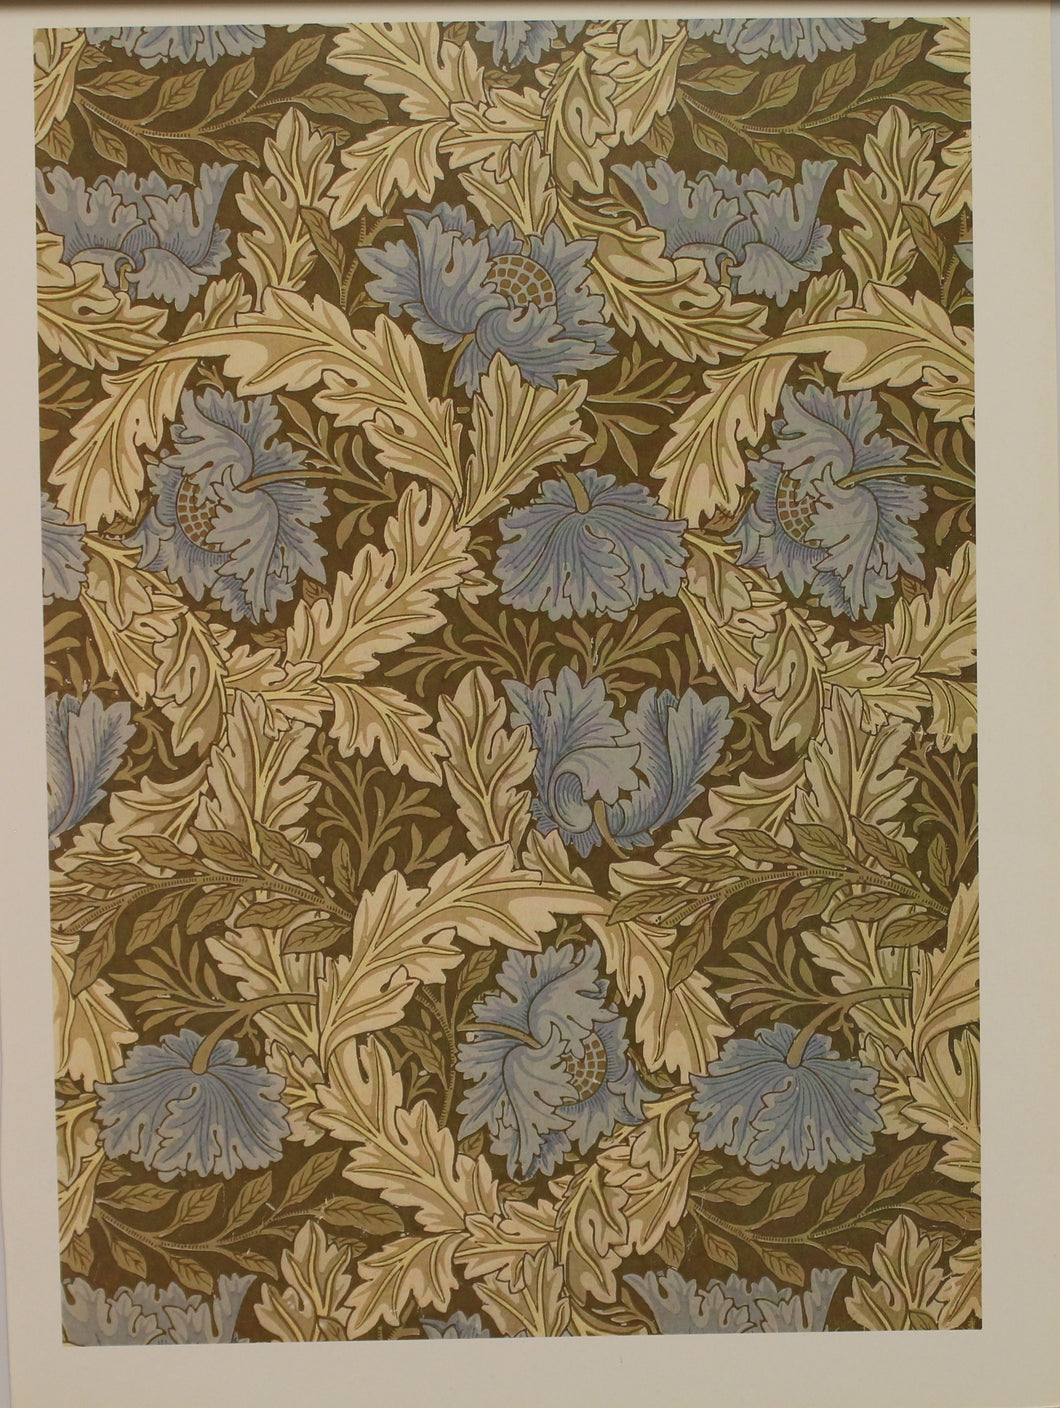 Decorator, Morris William, Wallpaper Ceiling Design, Wreath, Plate 12, Art Nouveau, c1876